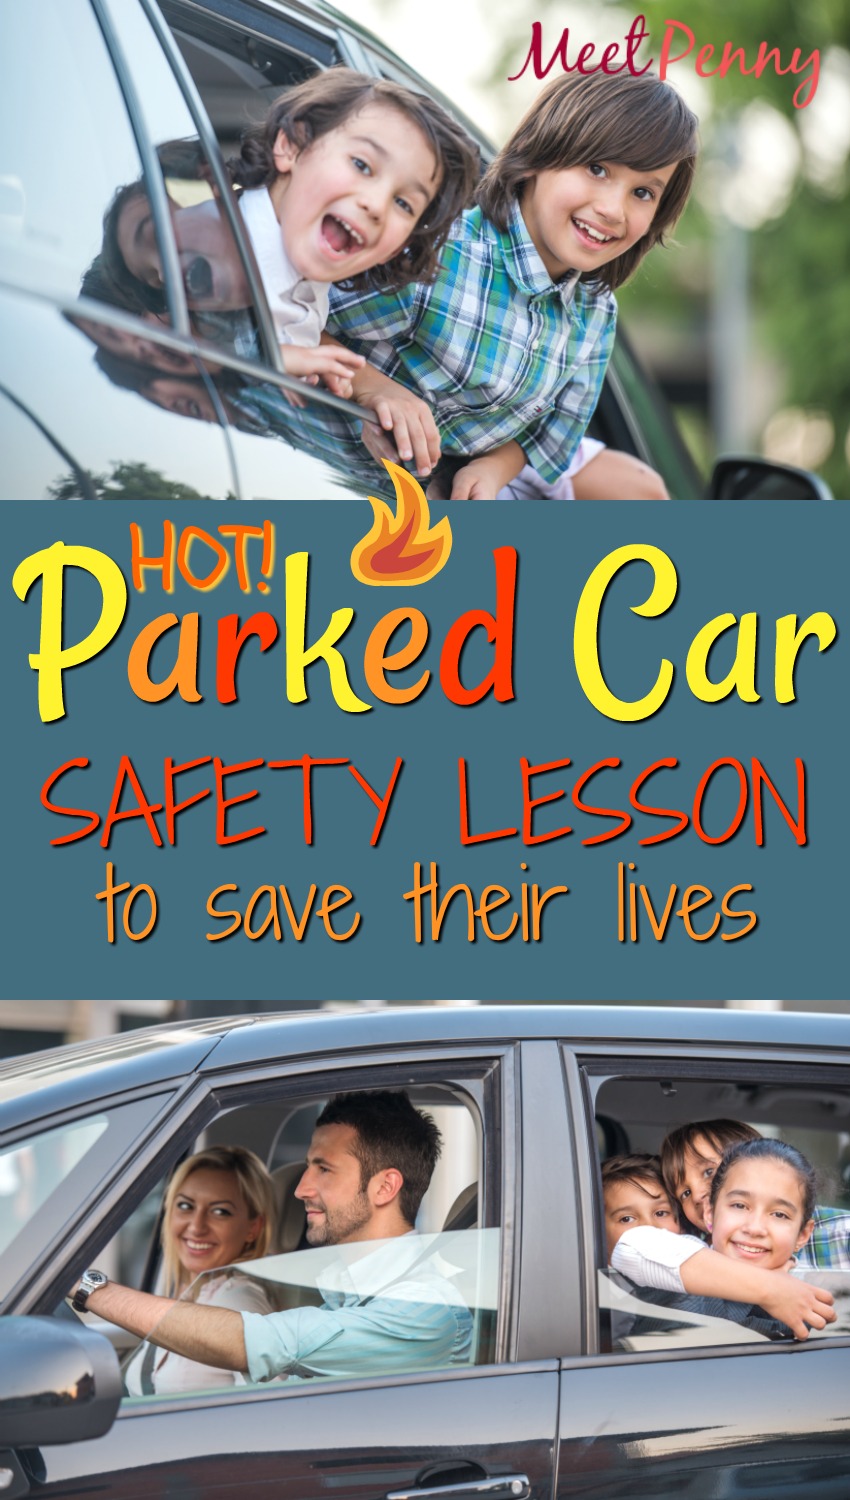 Hot Car Safety for Kids